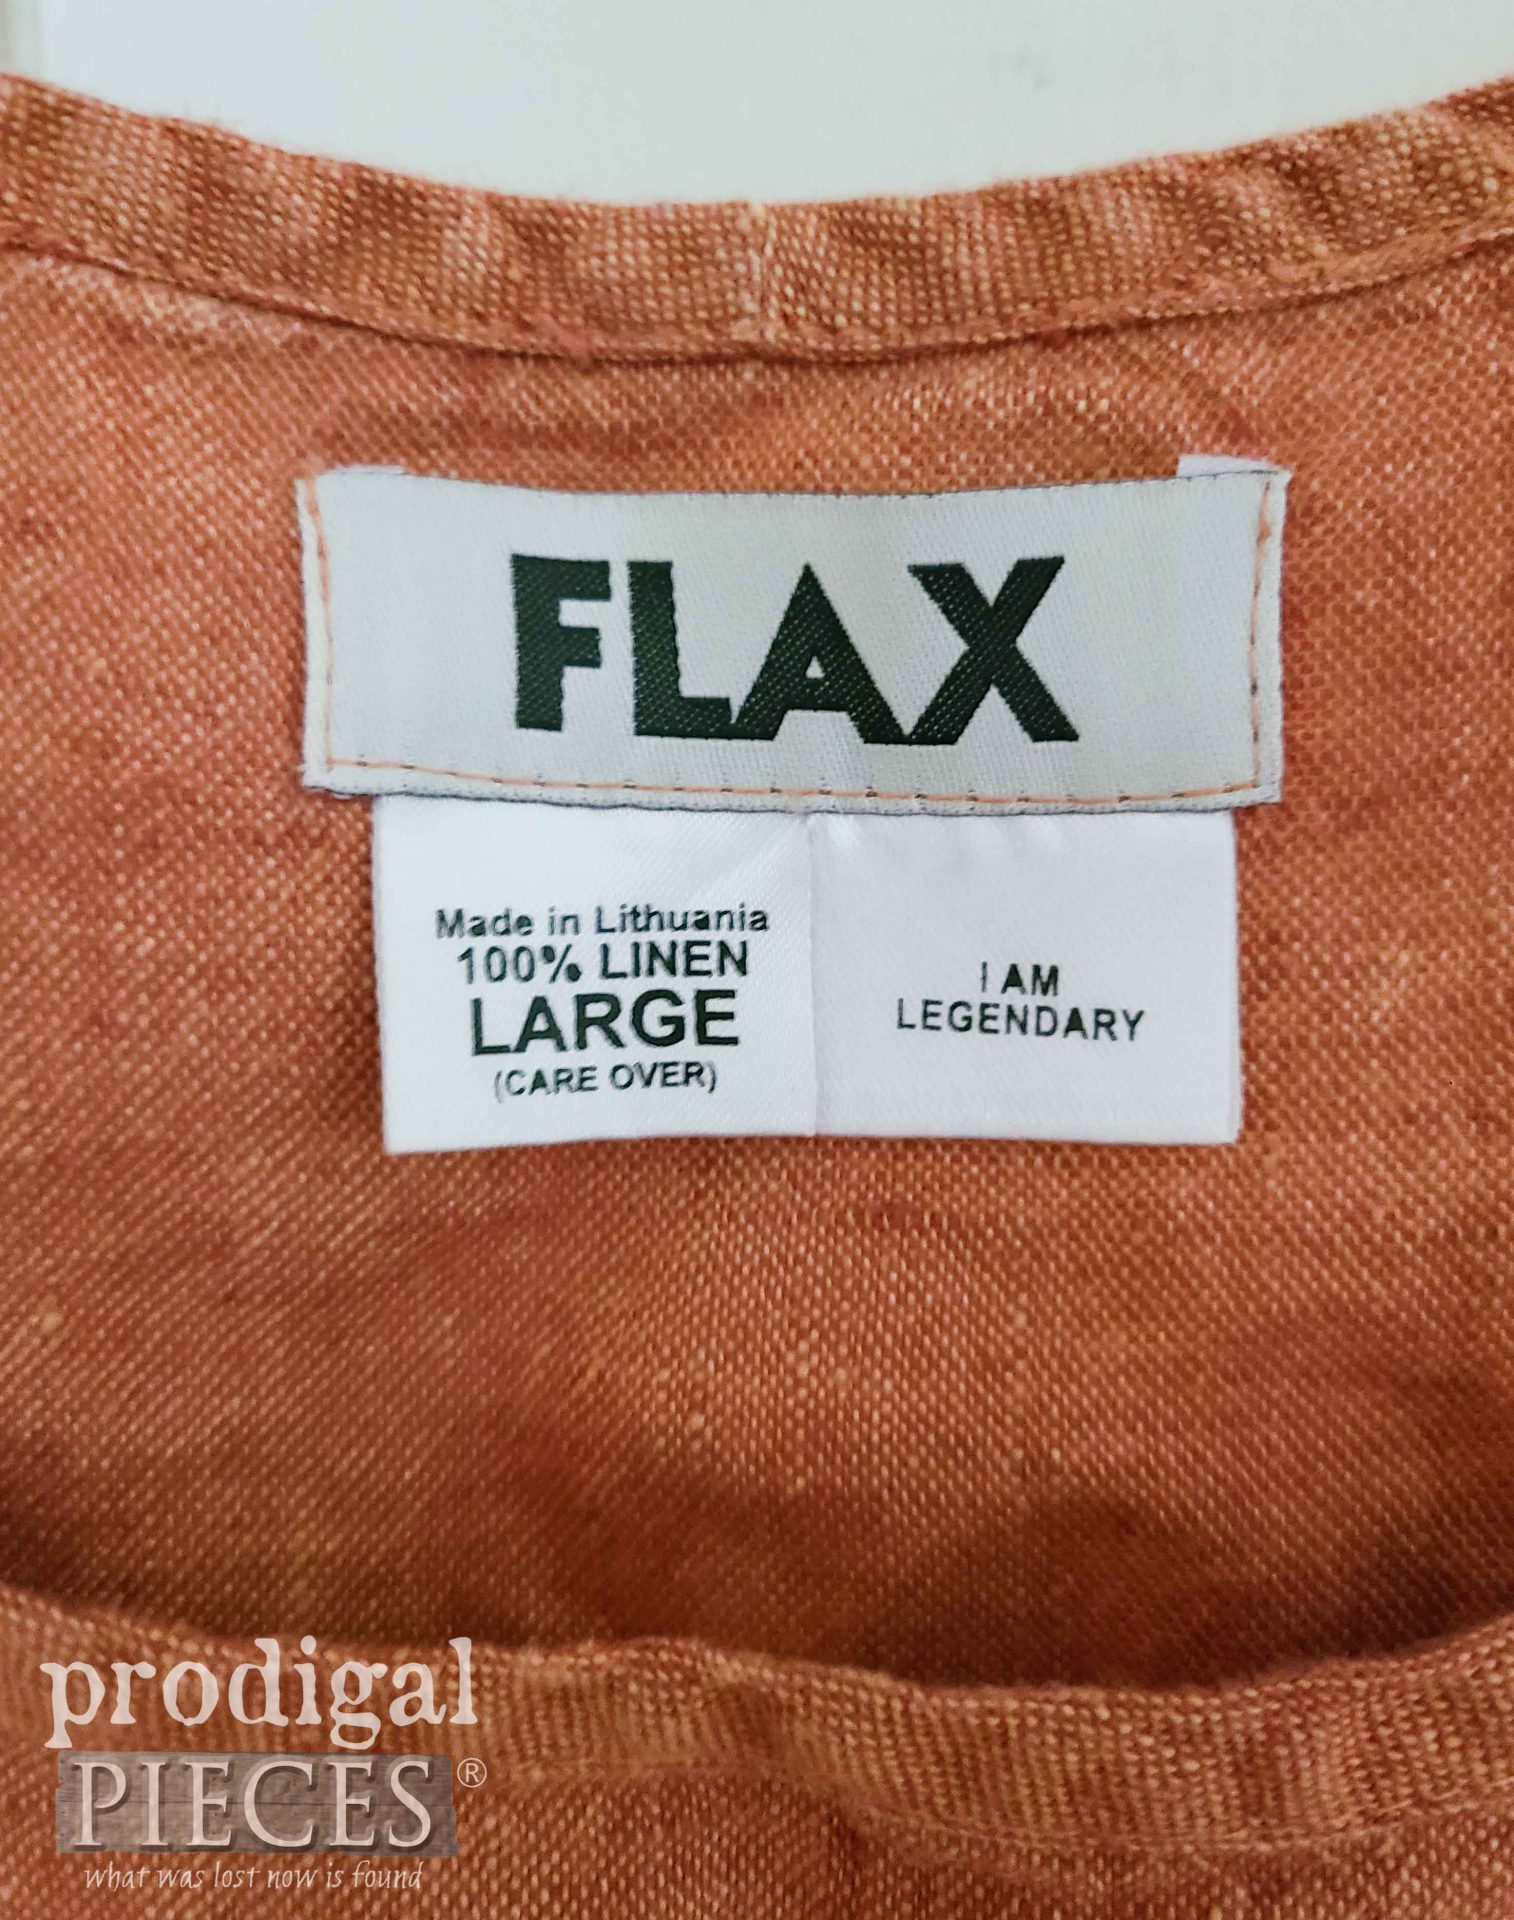 Thrifted Linen Tank Top Labels for DIY Bag | prodigalpieces.com #prodigalpieces